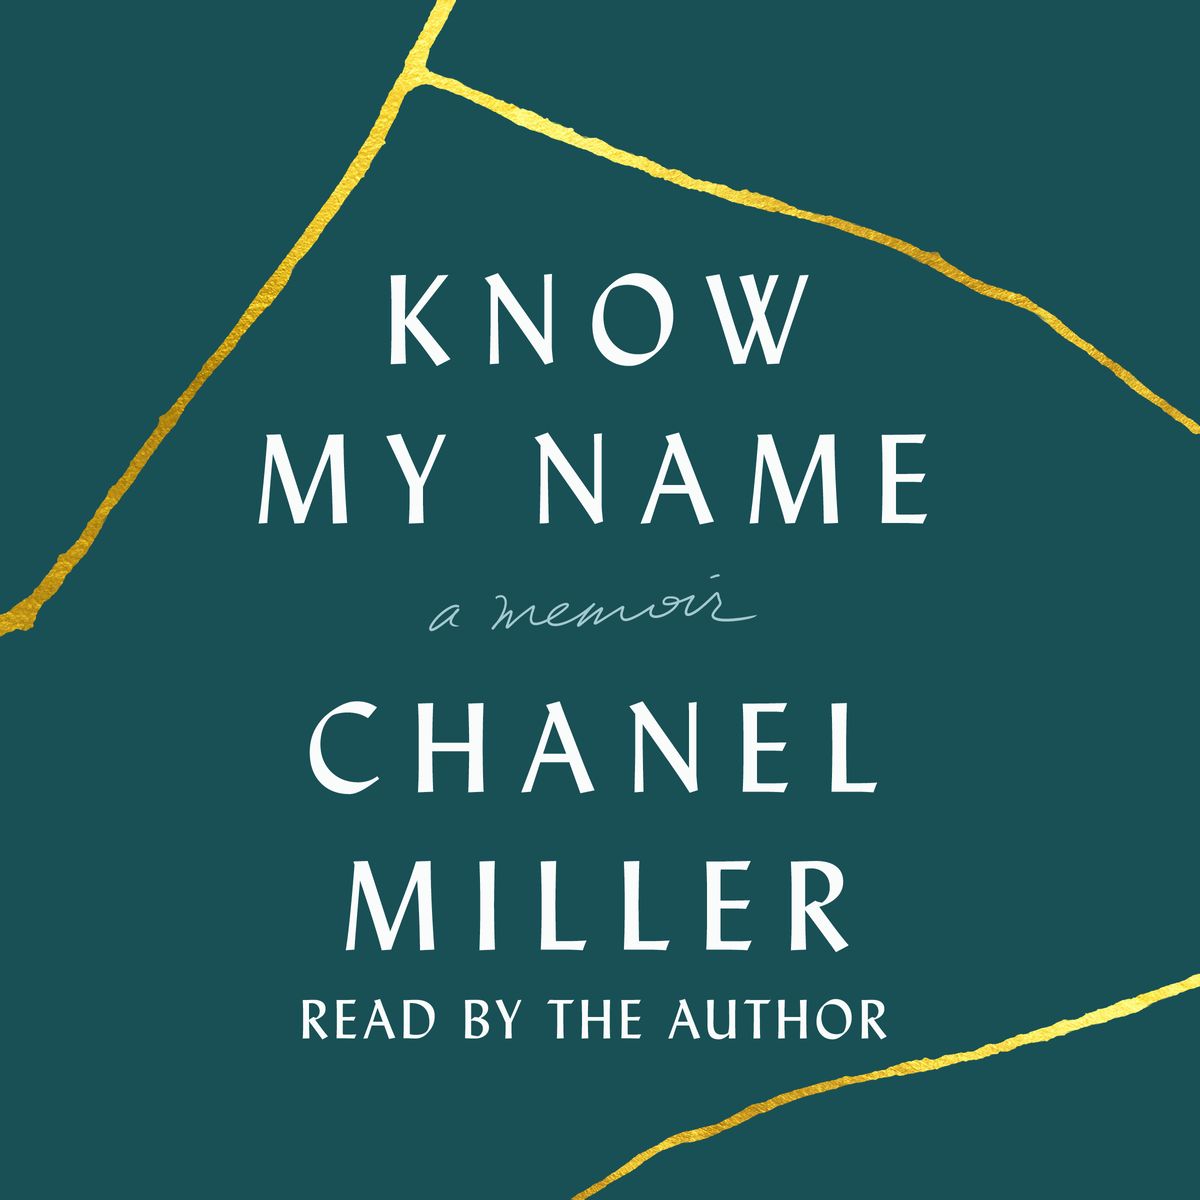 Chanel Miller